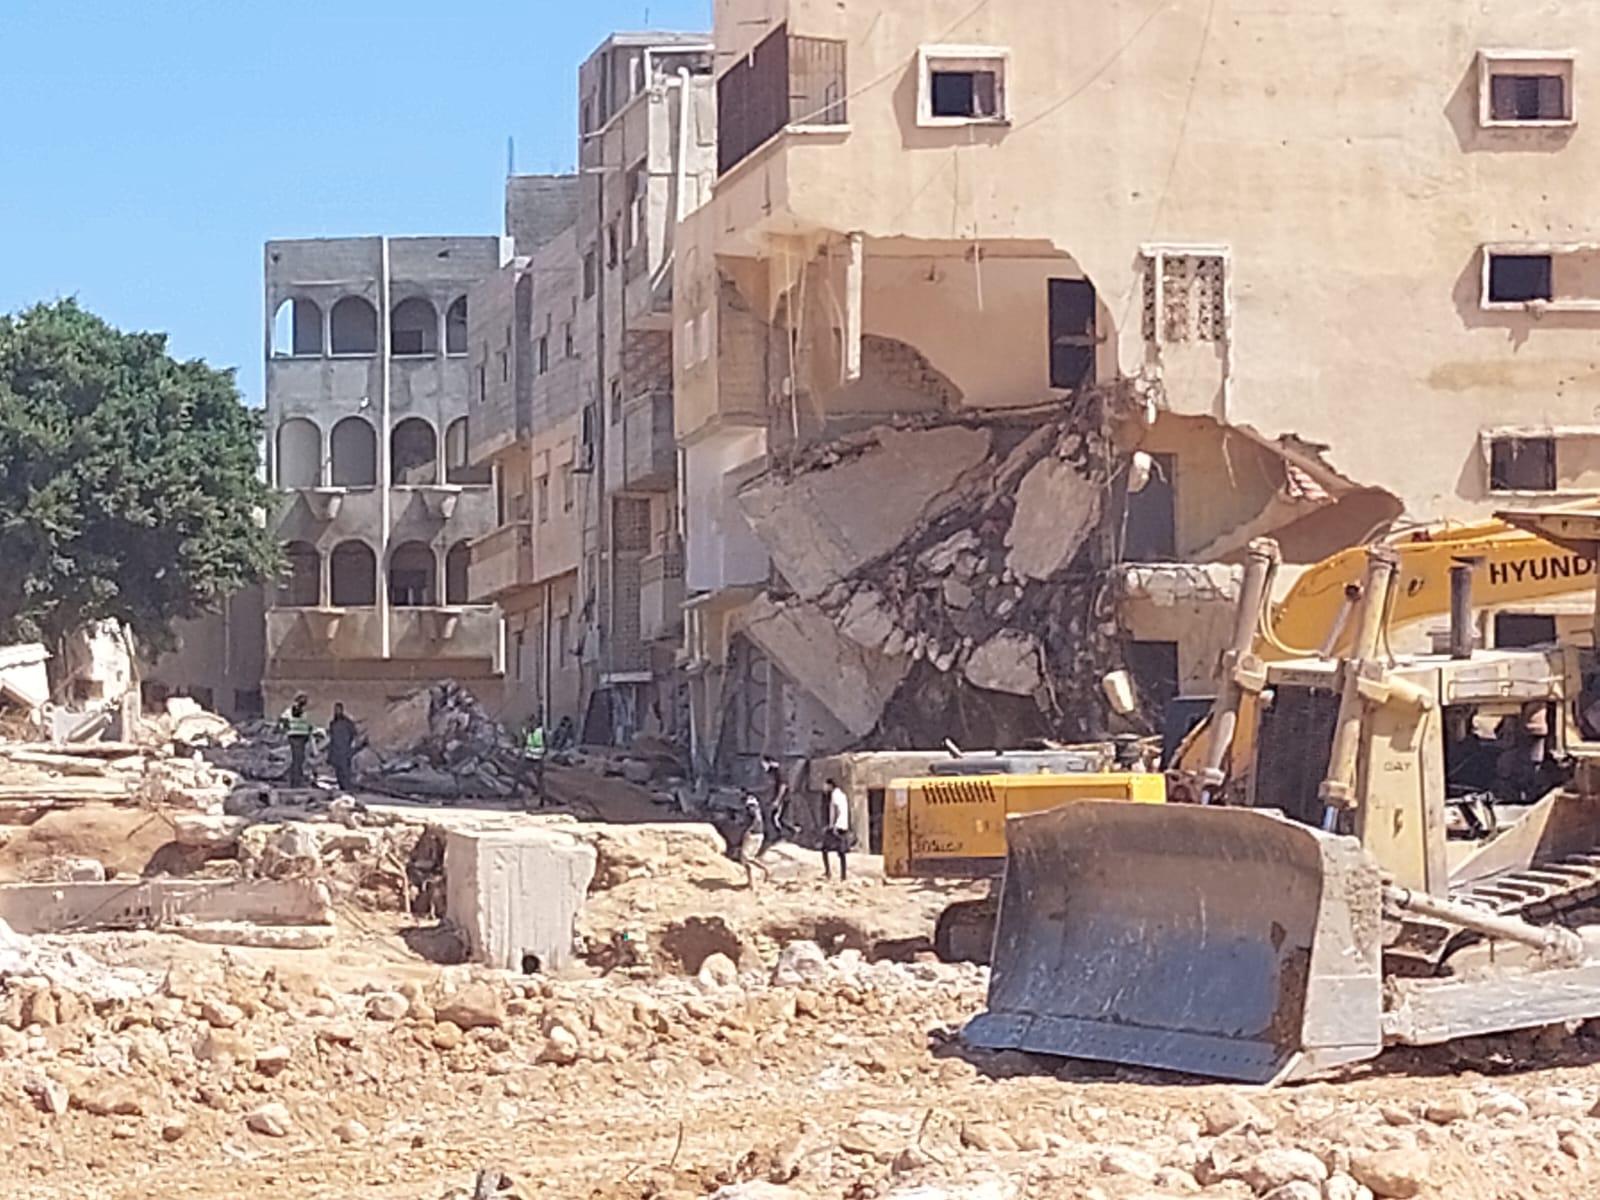 View of Derna, Libya, affected by floods. 